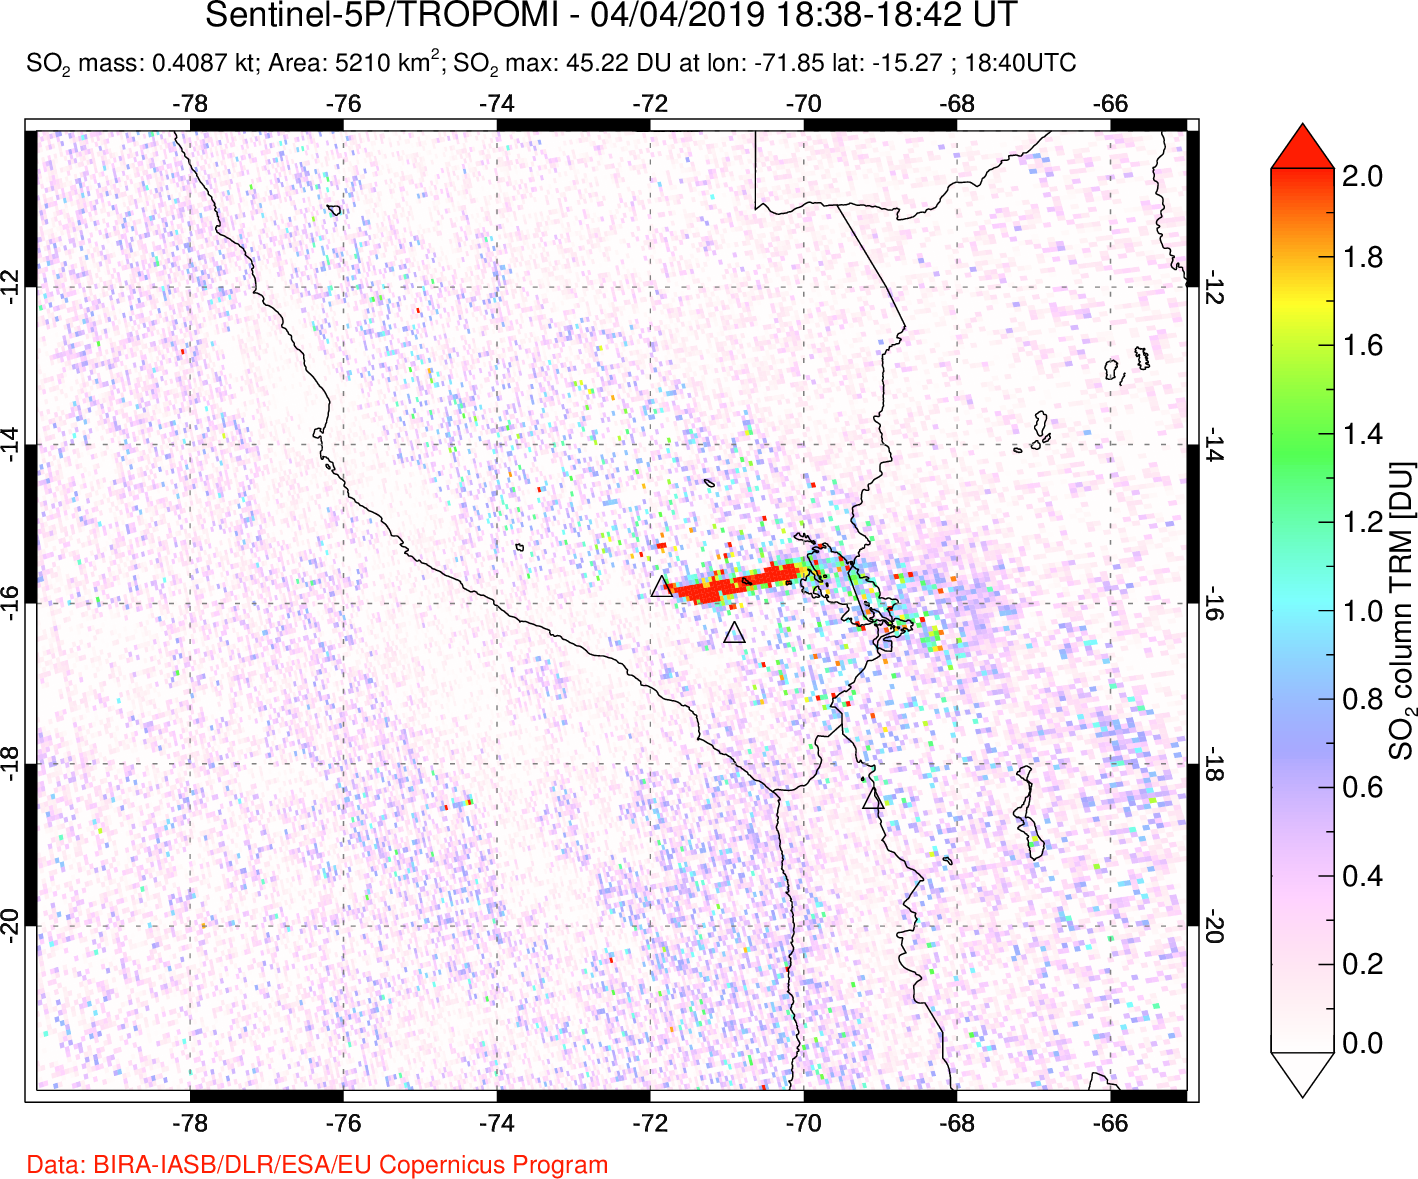 A sulfur dioxide image over Peru on Apr 04, 2019.